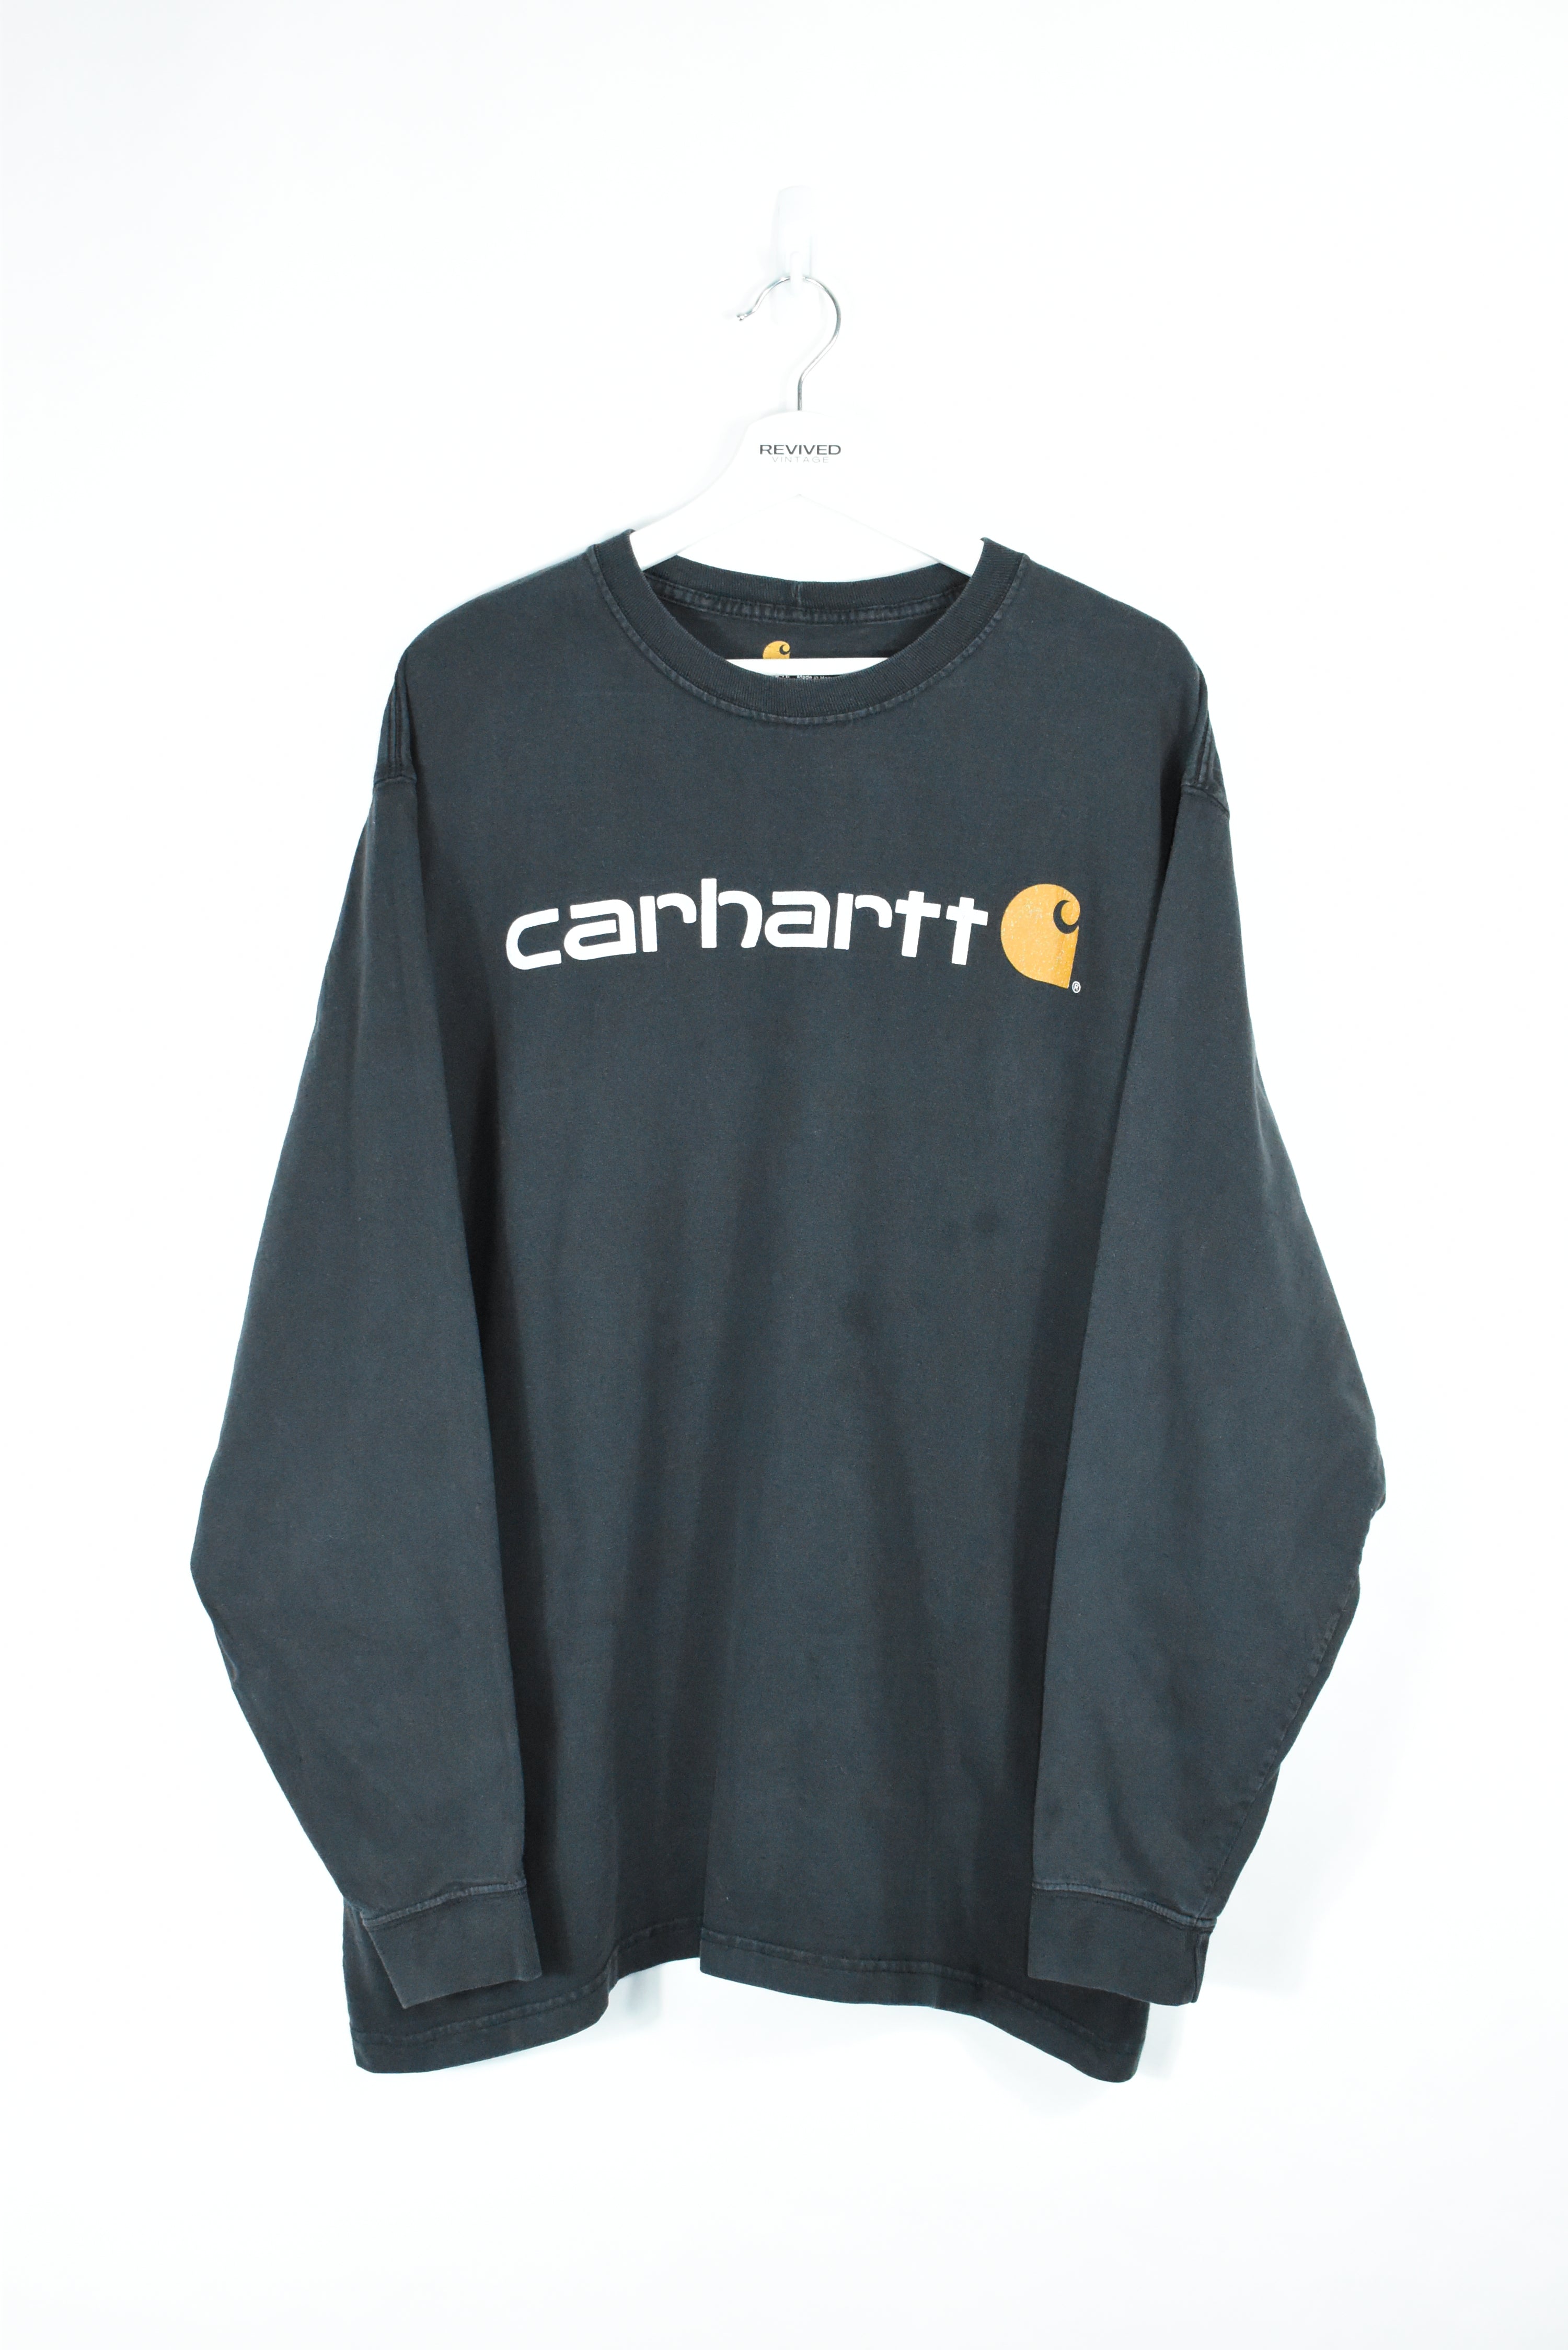 Vintage Carhartt Long Sleeve Shirt Xlarge